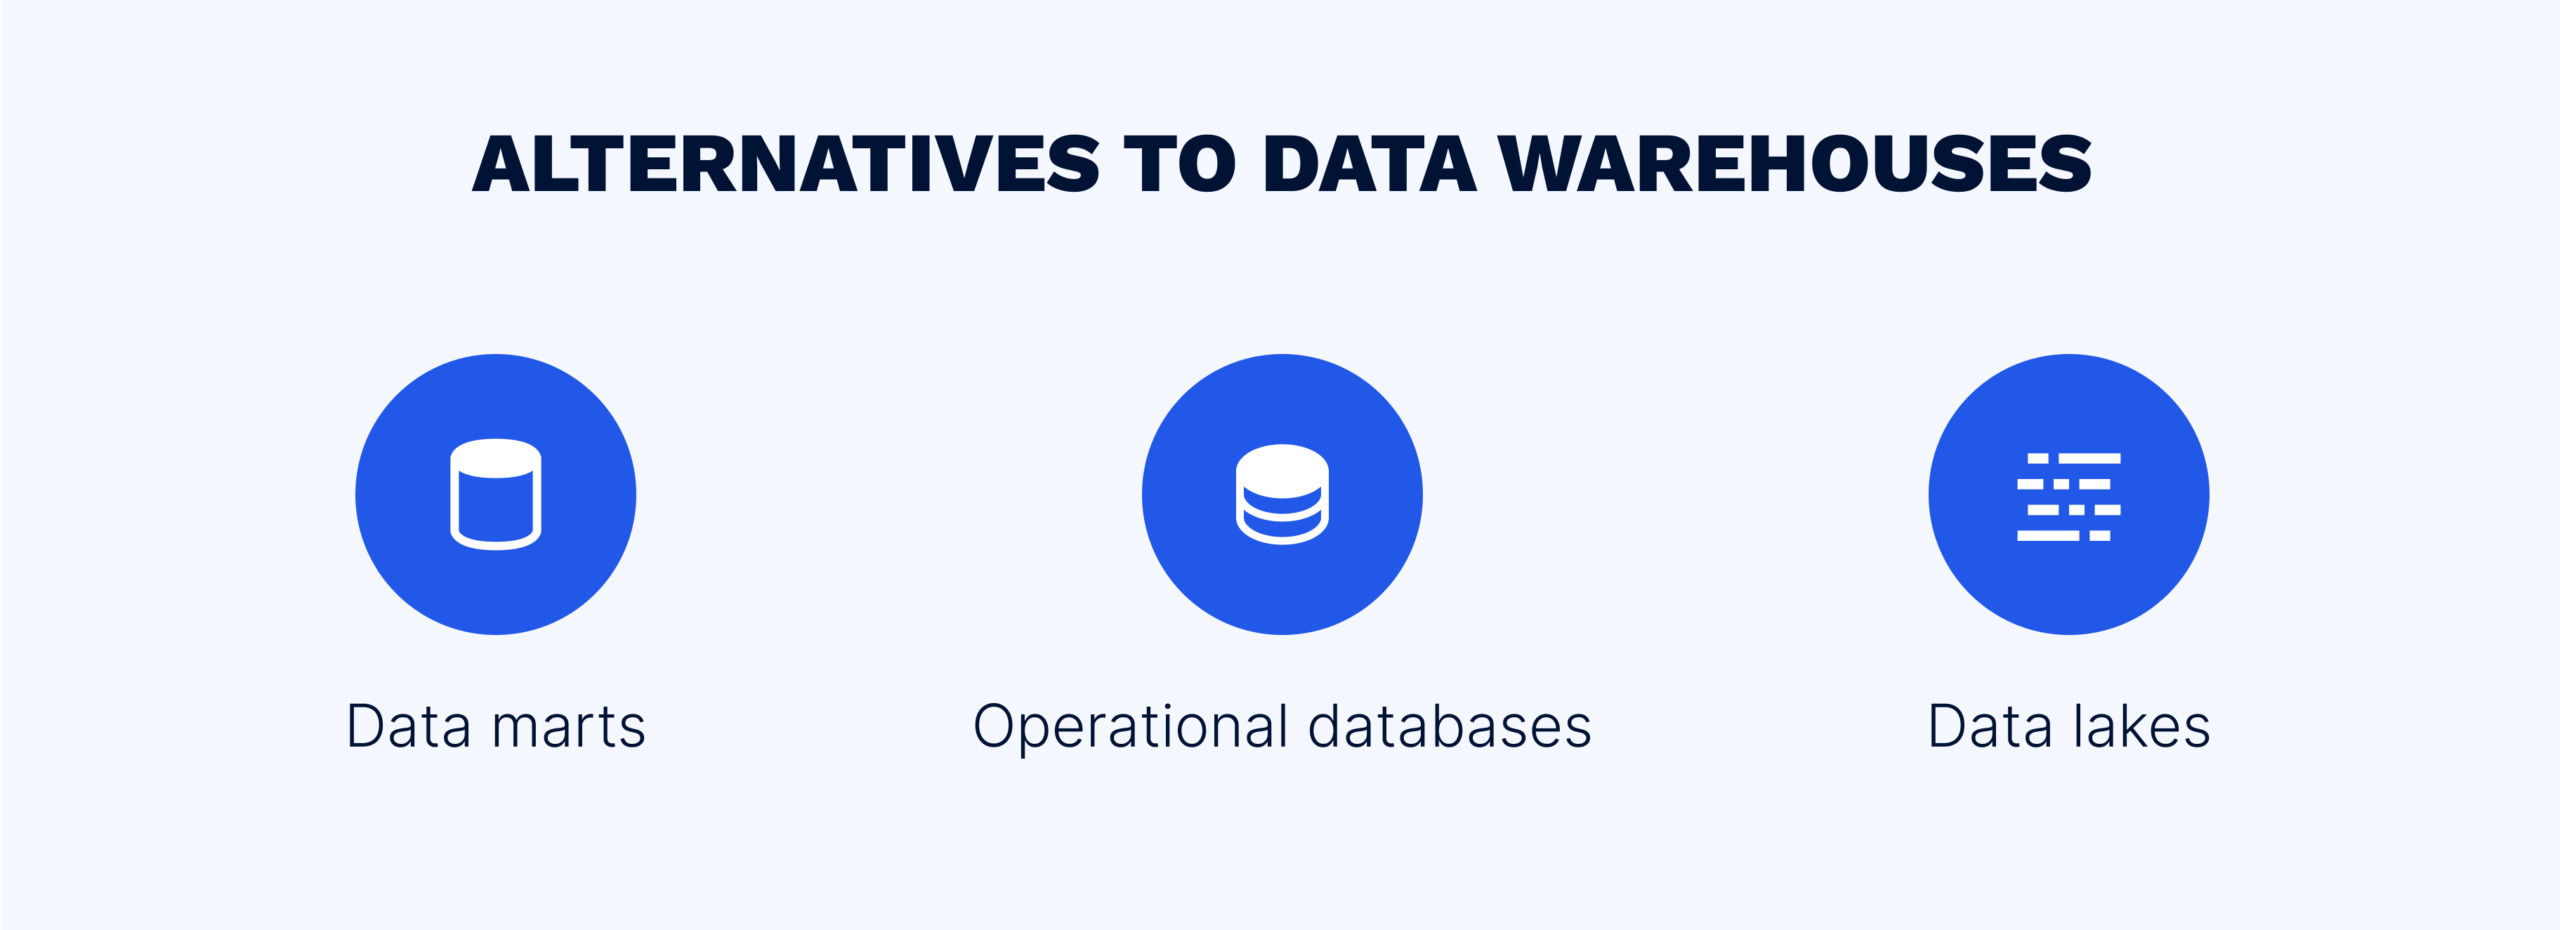 Alternatives to data warehouses